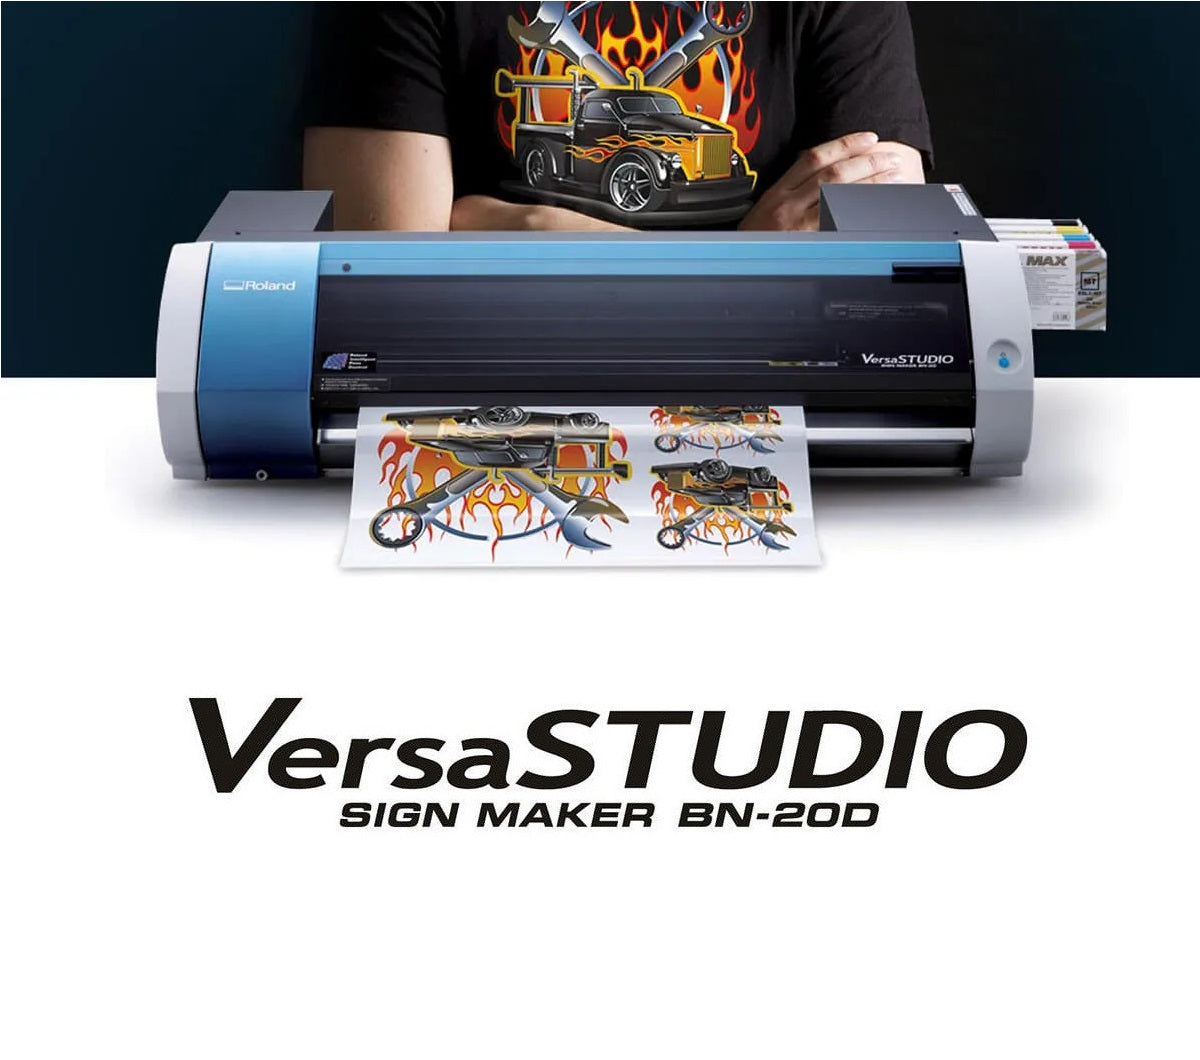 Roland VersaStudio BN-20D Complete Direct-to-Film (DTF) Printer System